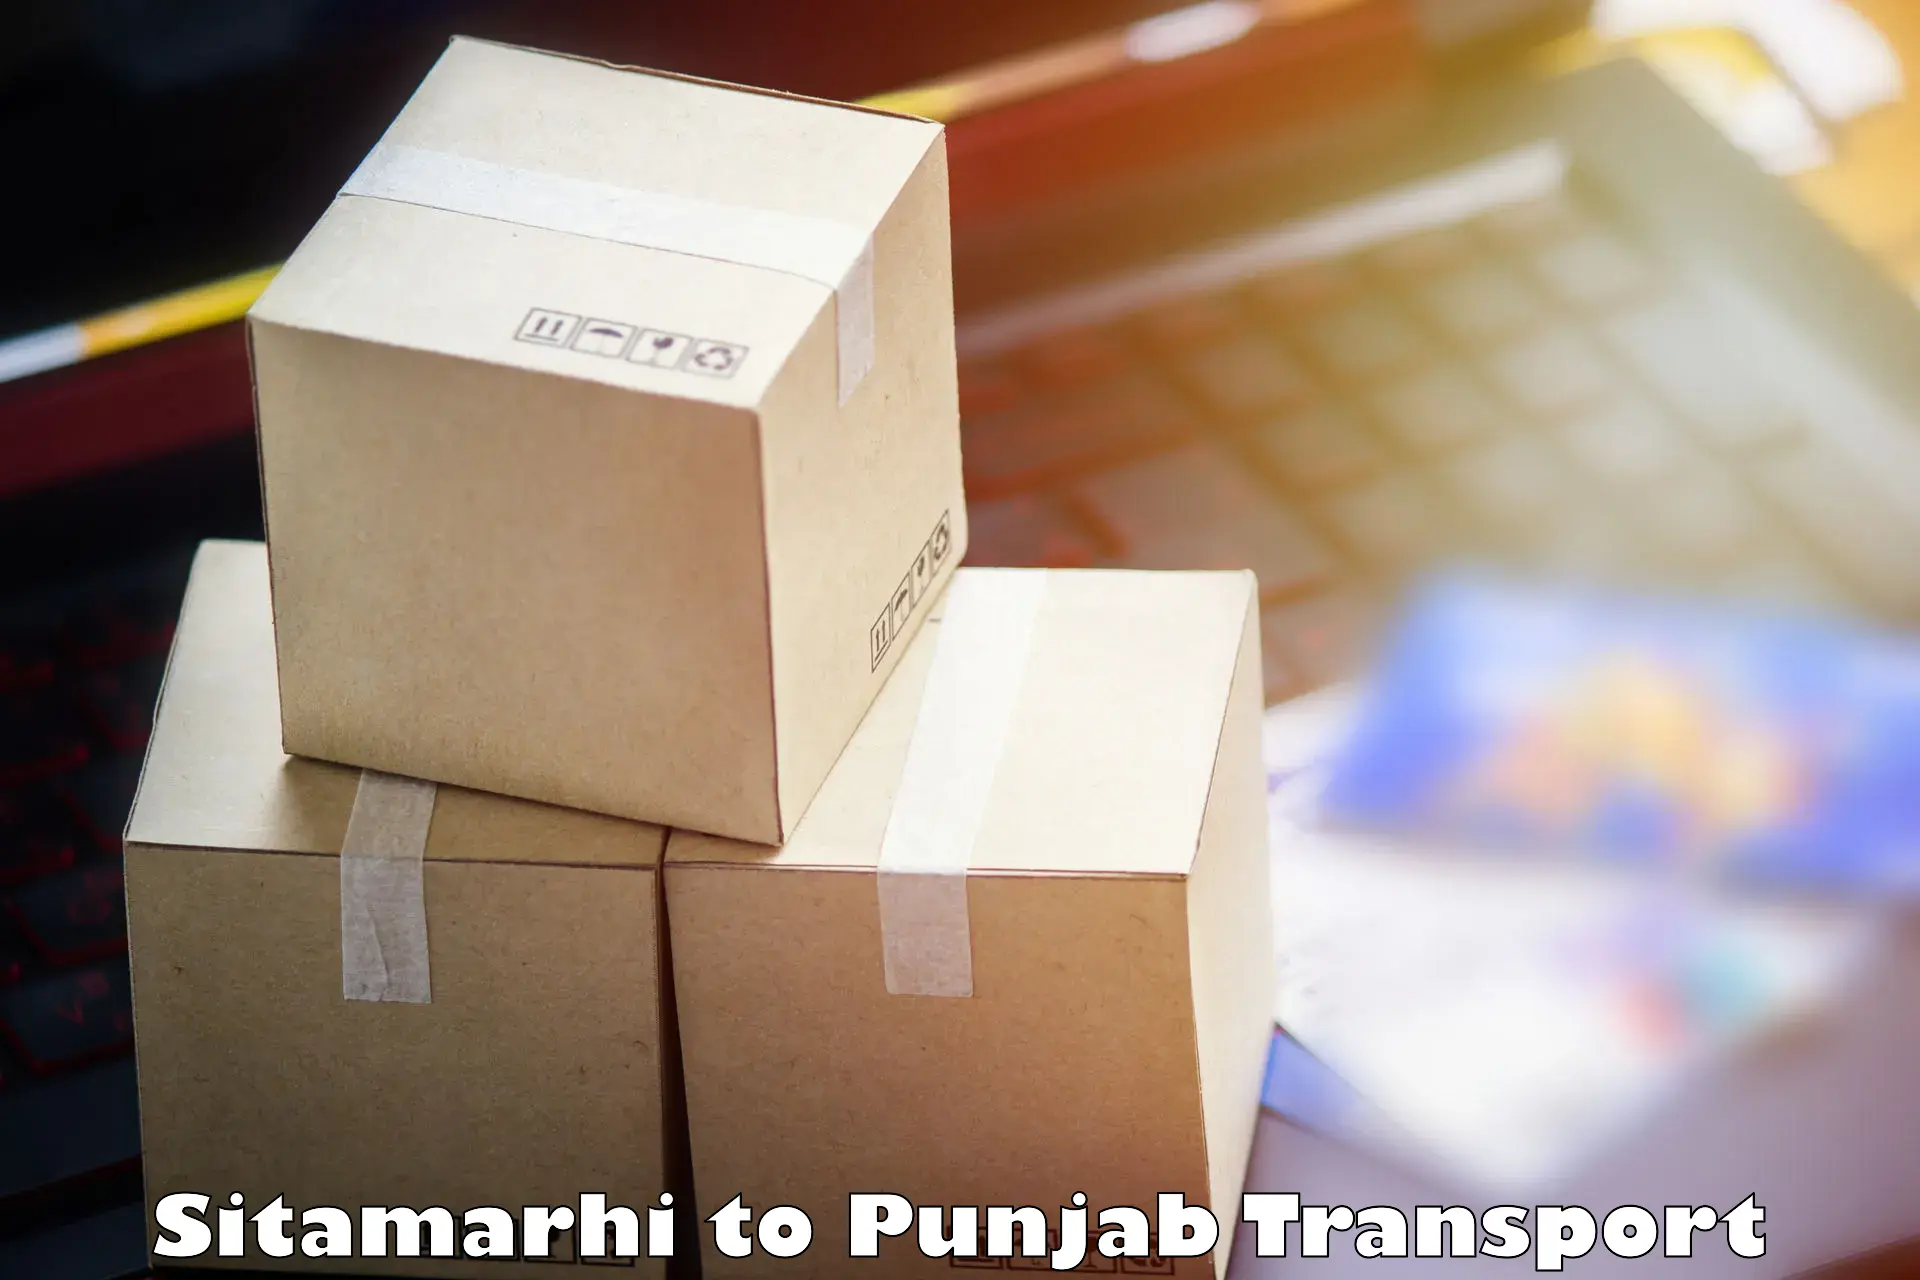 Pick up transport service Sitamarhi to Dharamkot